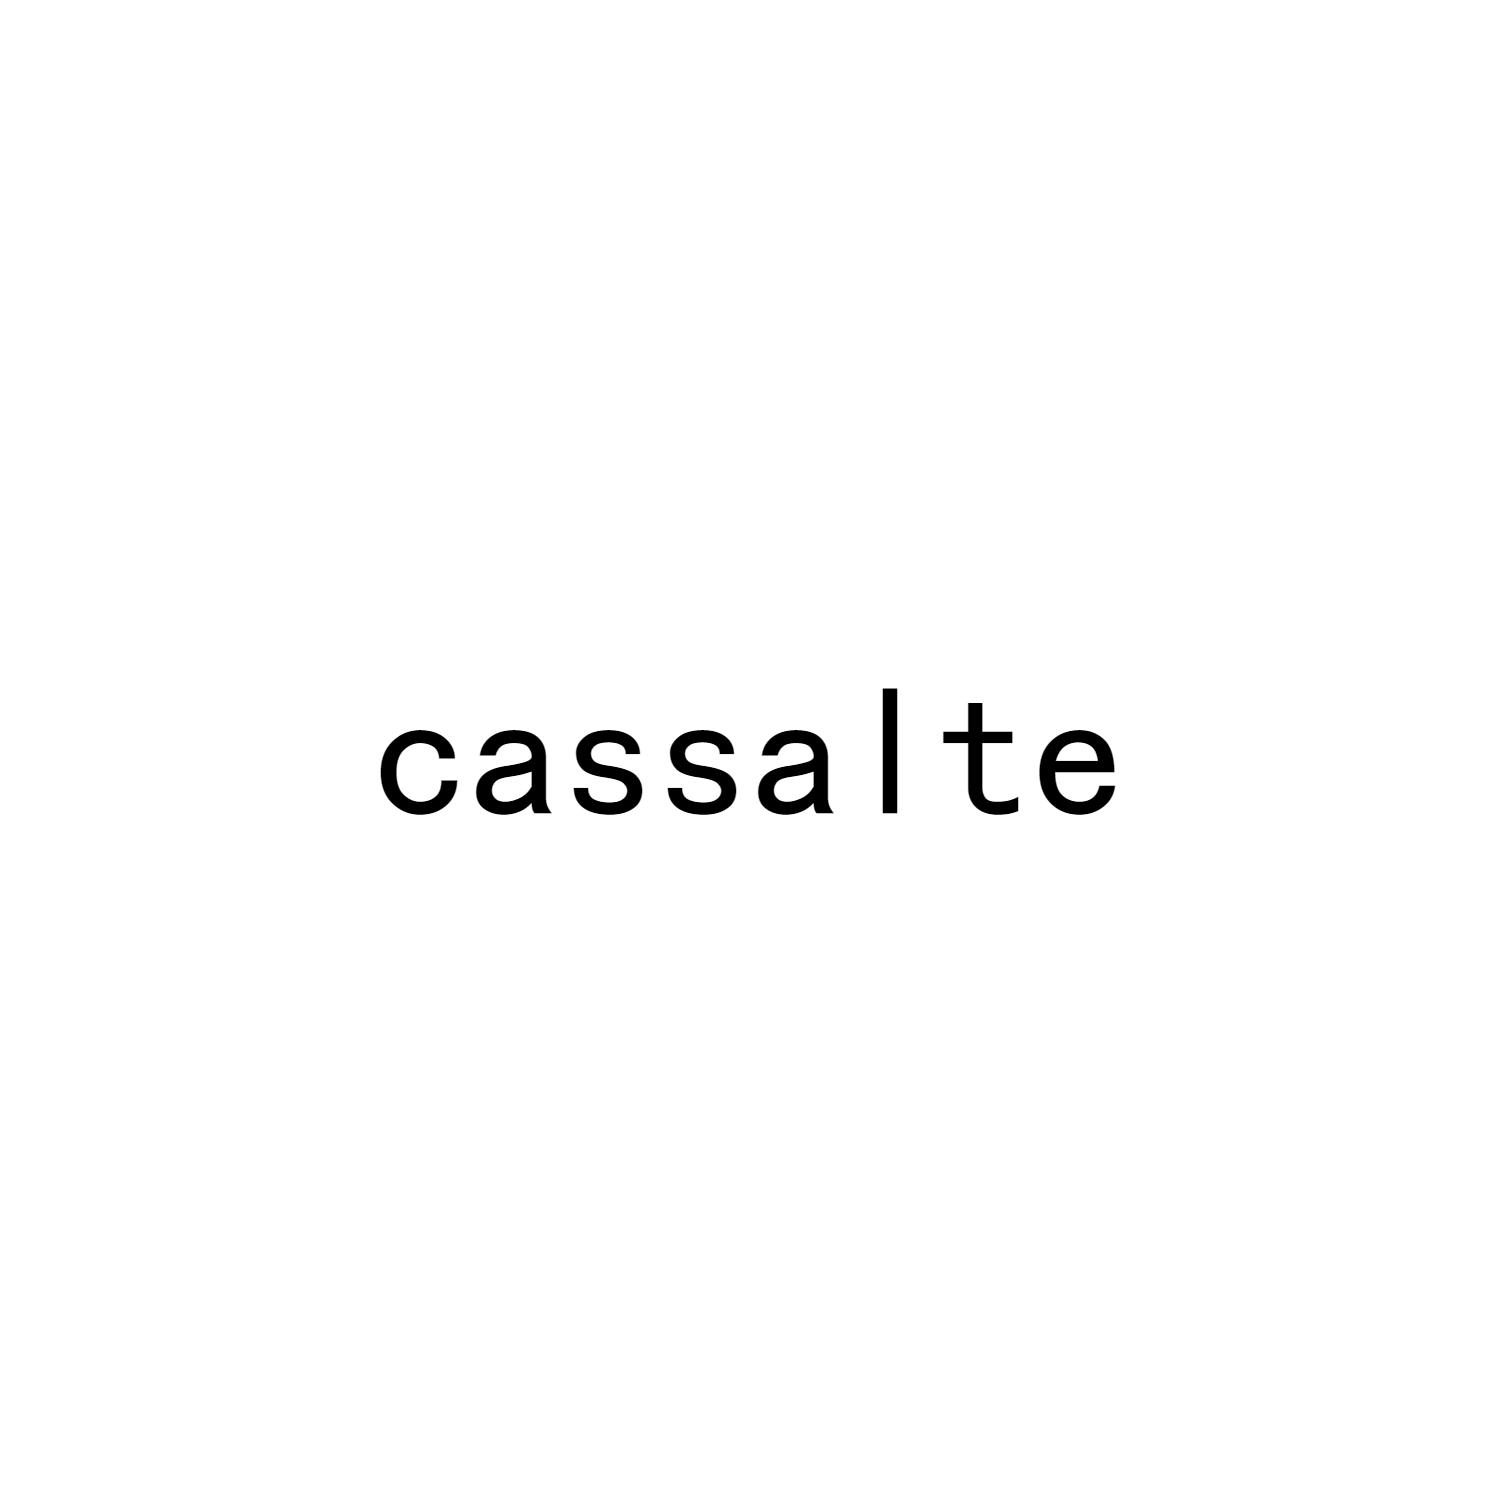 cassalte